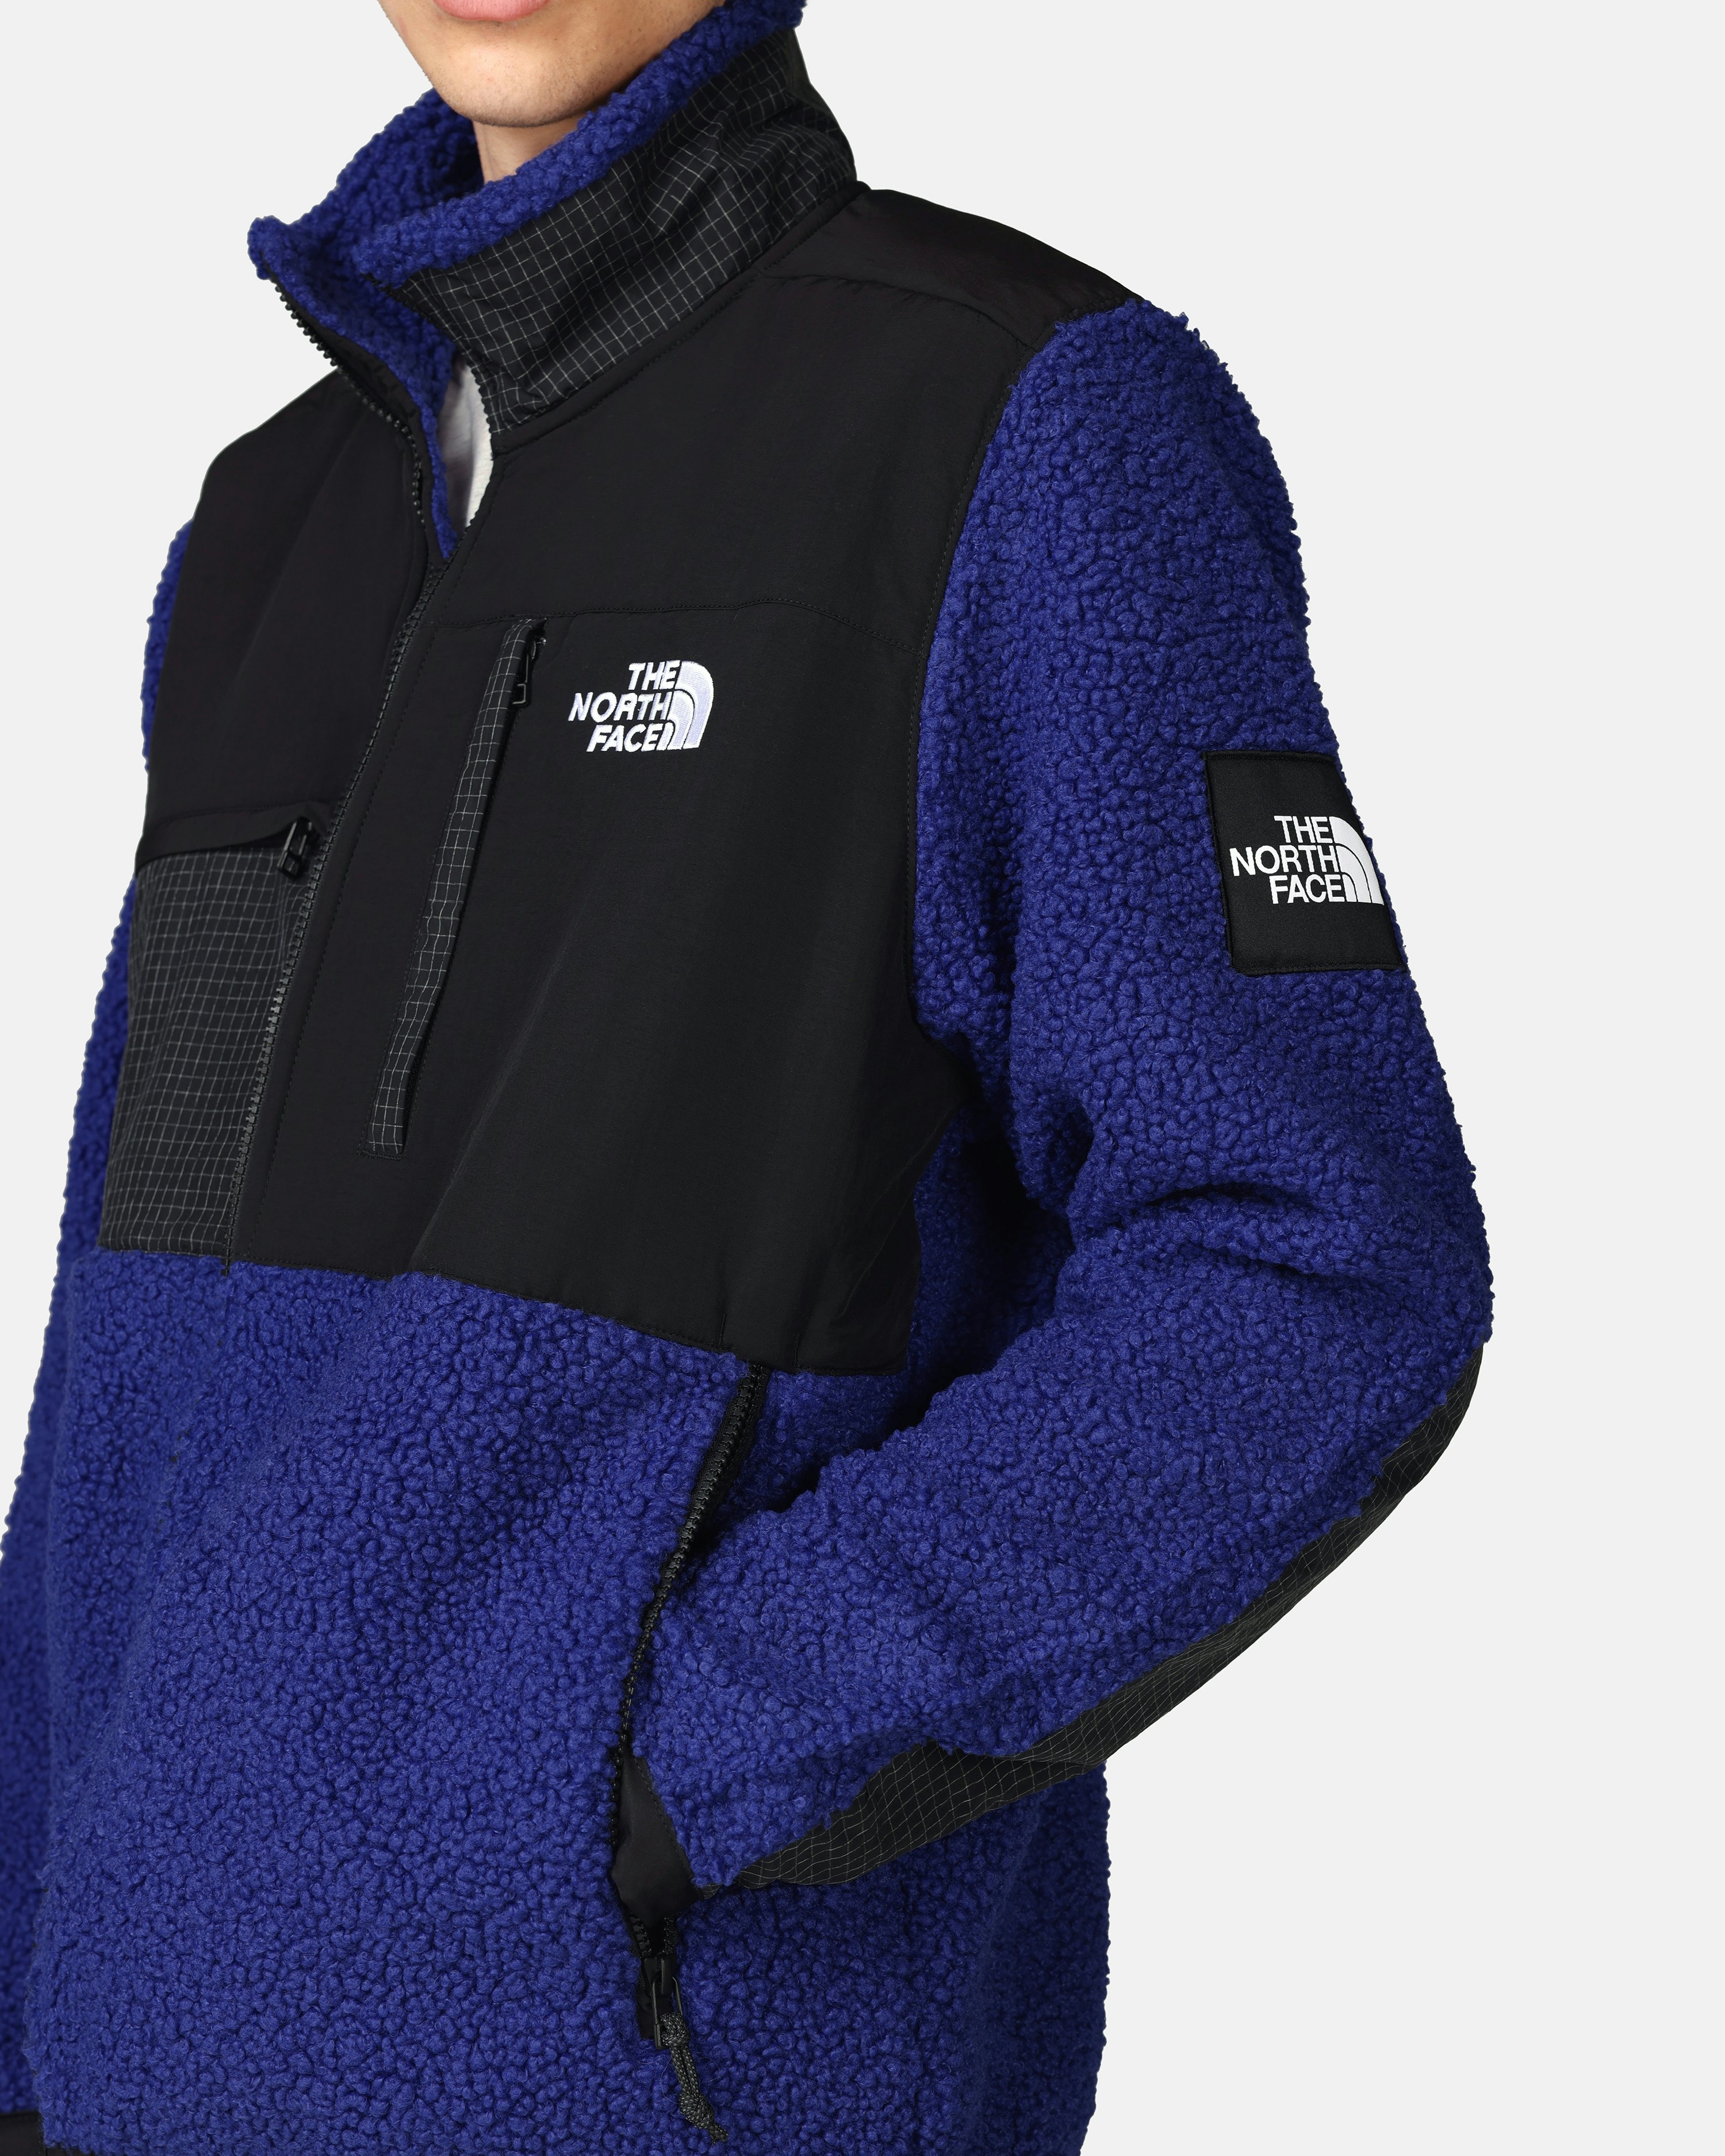 The North Face Fleece Jacket - Seasonal Denali Blue | Men | Junkyard